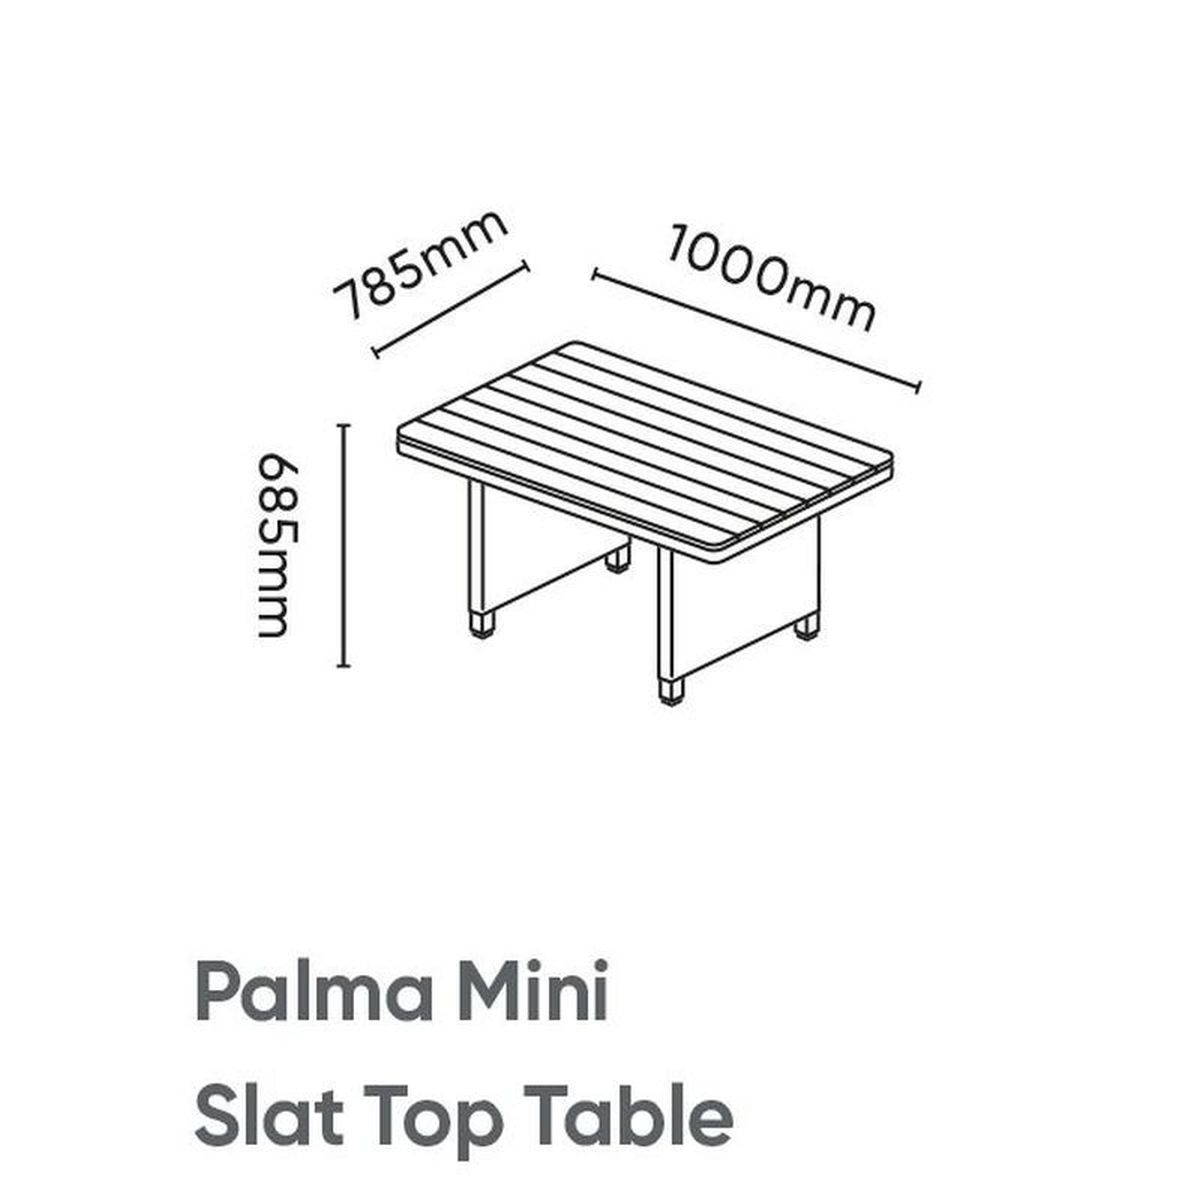 Kettler Palma Mini Corner Set - Rattan